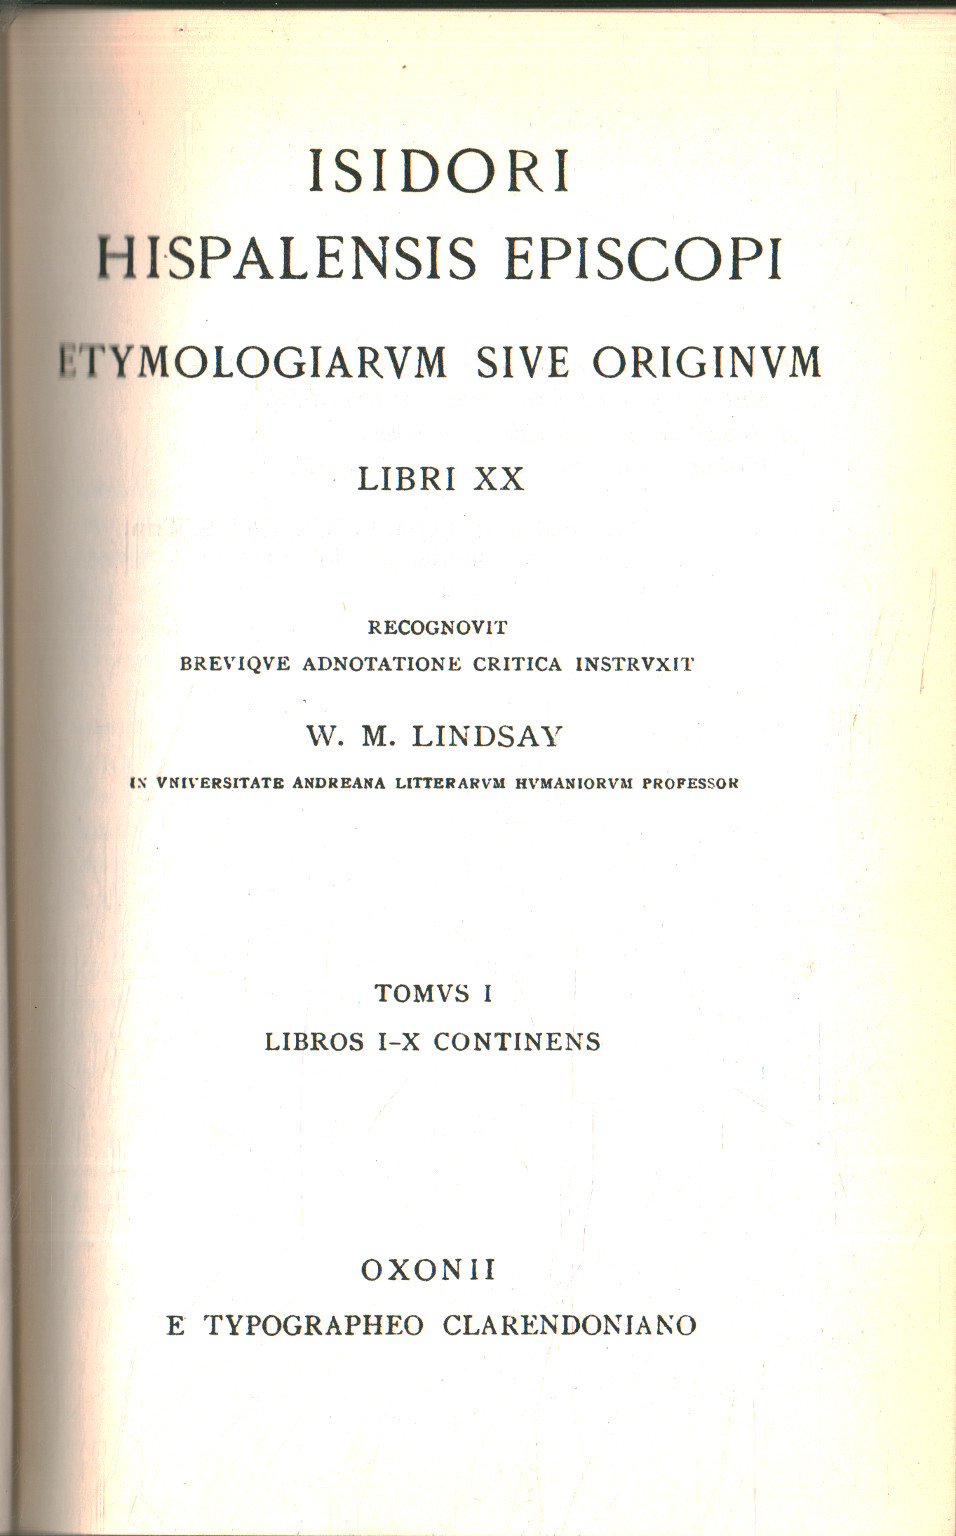 Etymologiarum sive originum. Tomo I, Isidori Hispalensis Episcopi